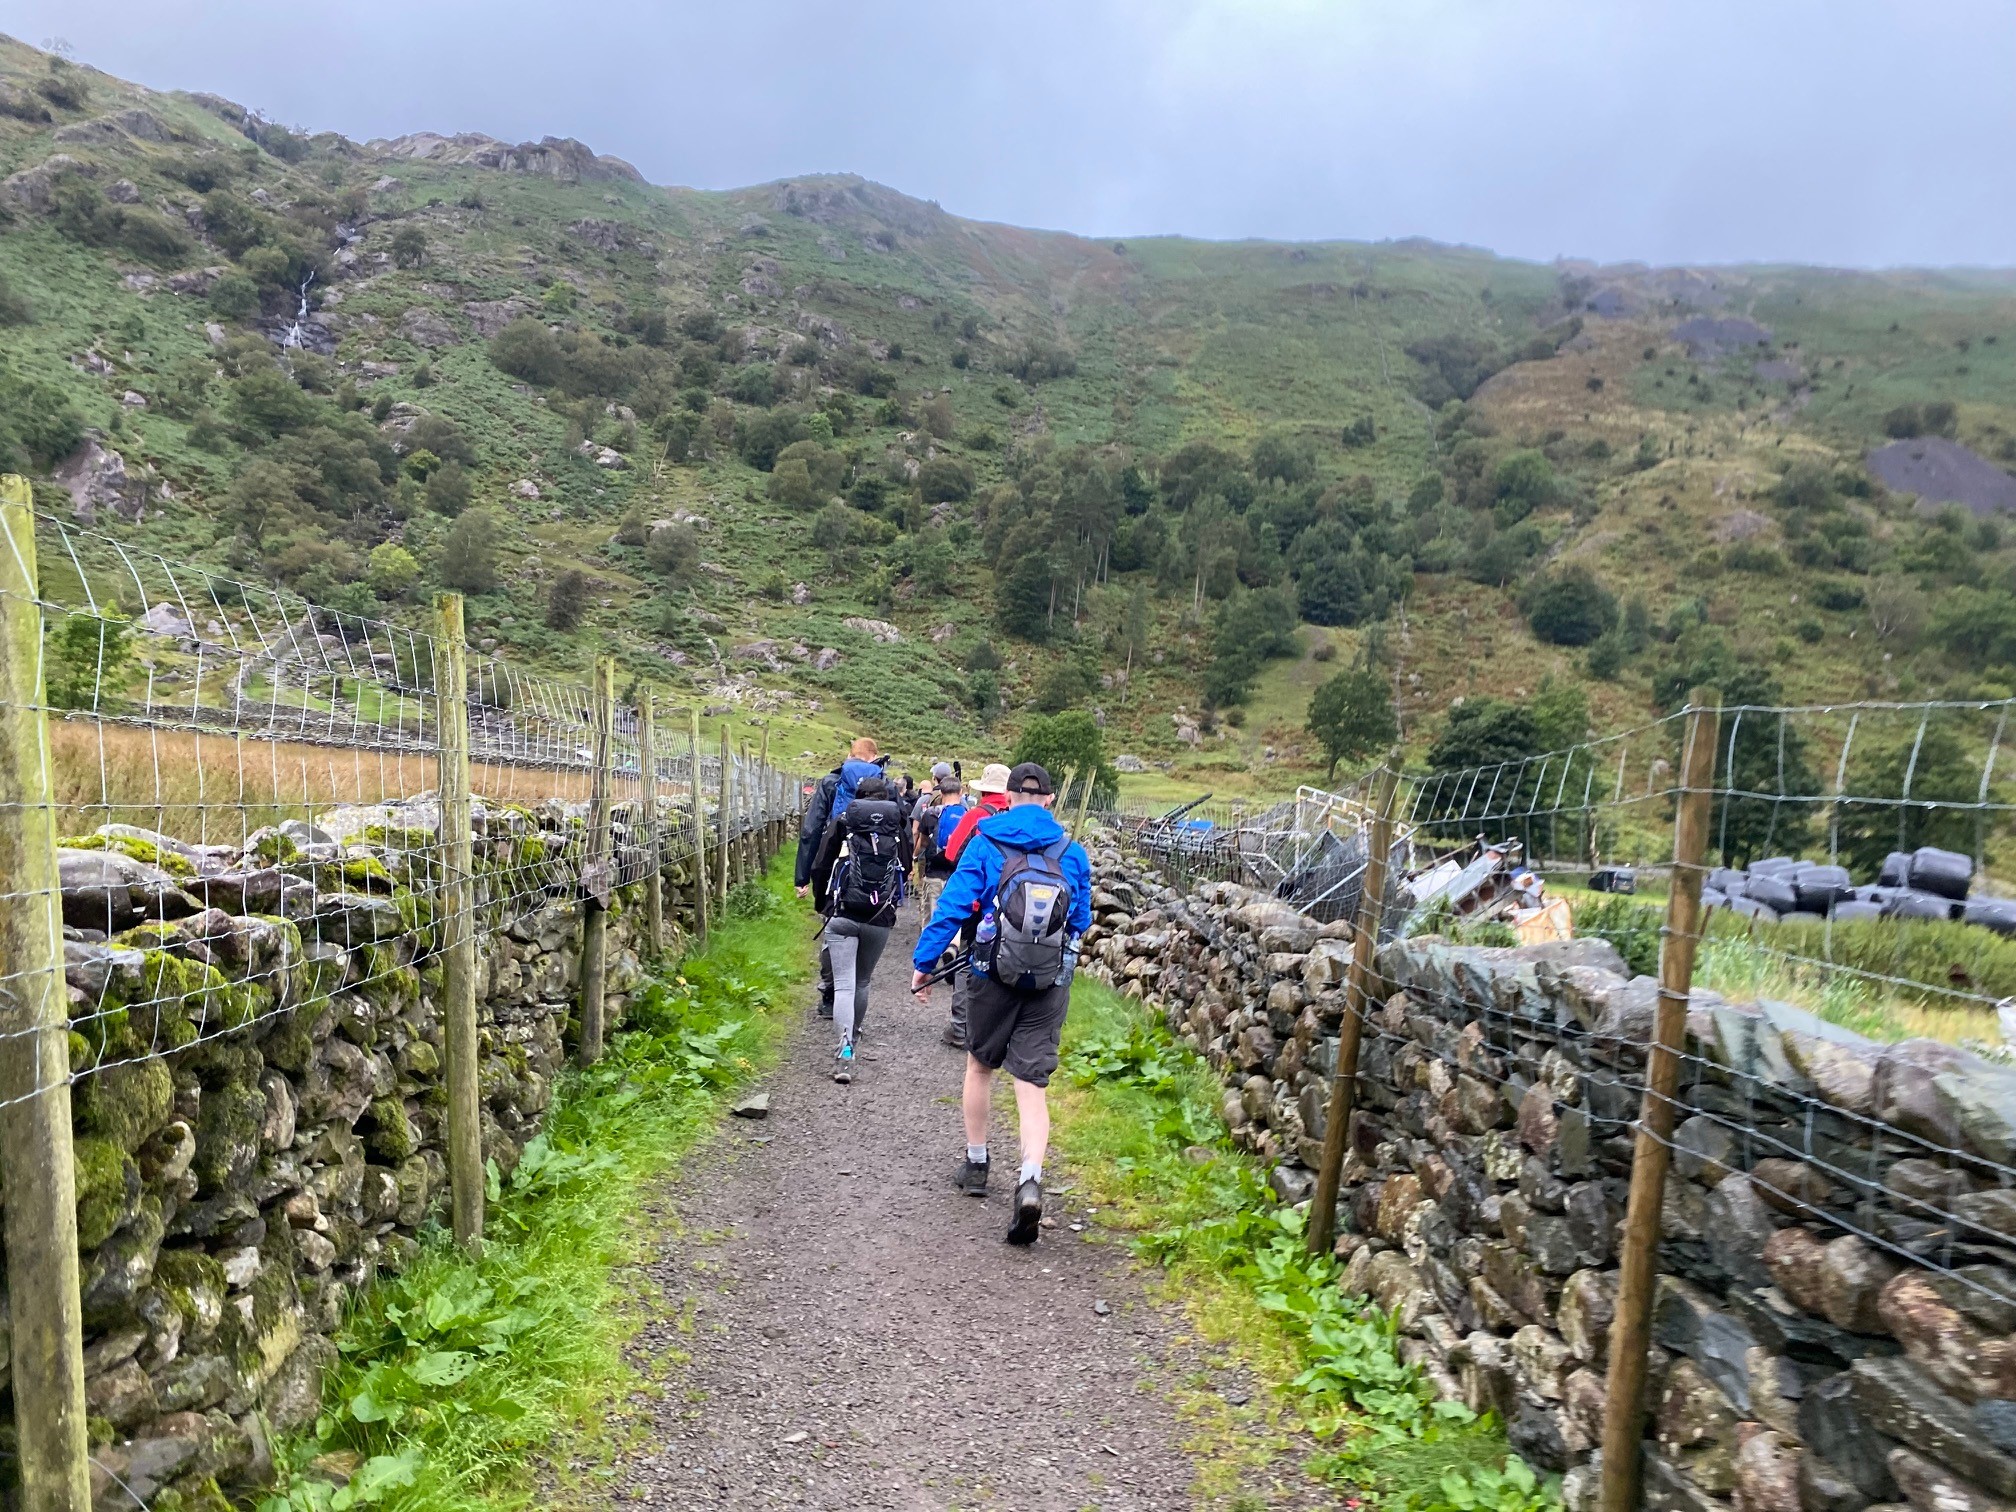 Group walking along a path by a mountain